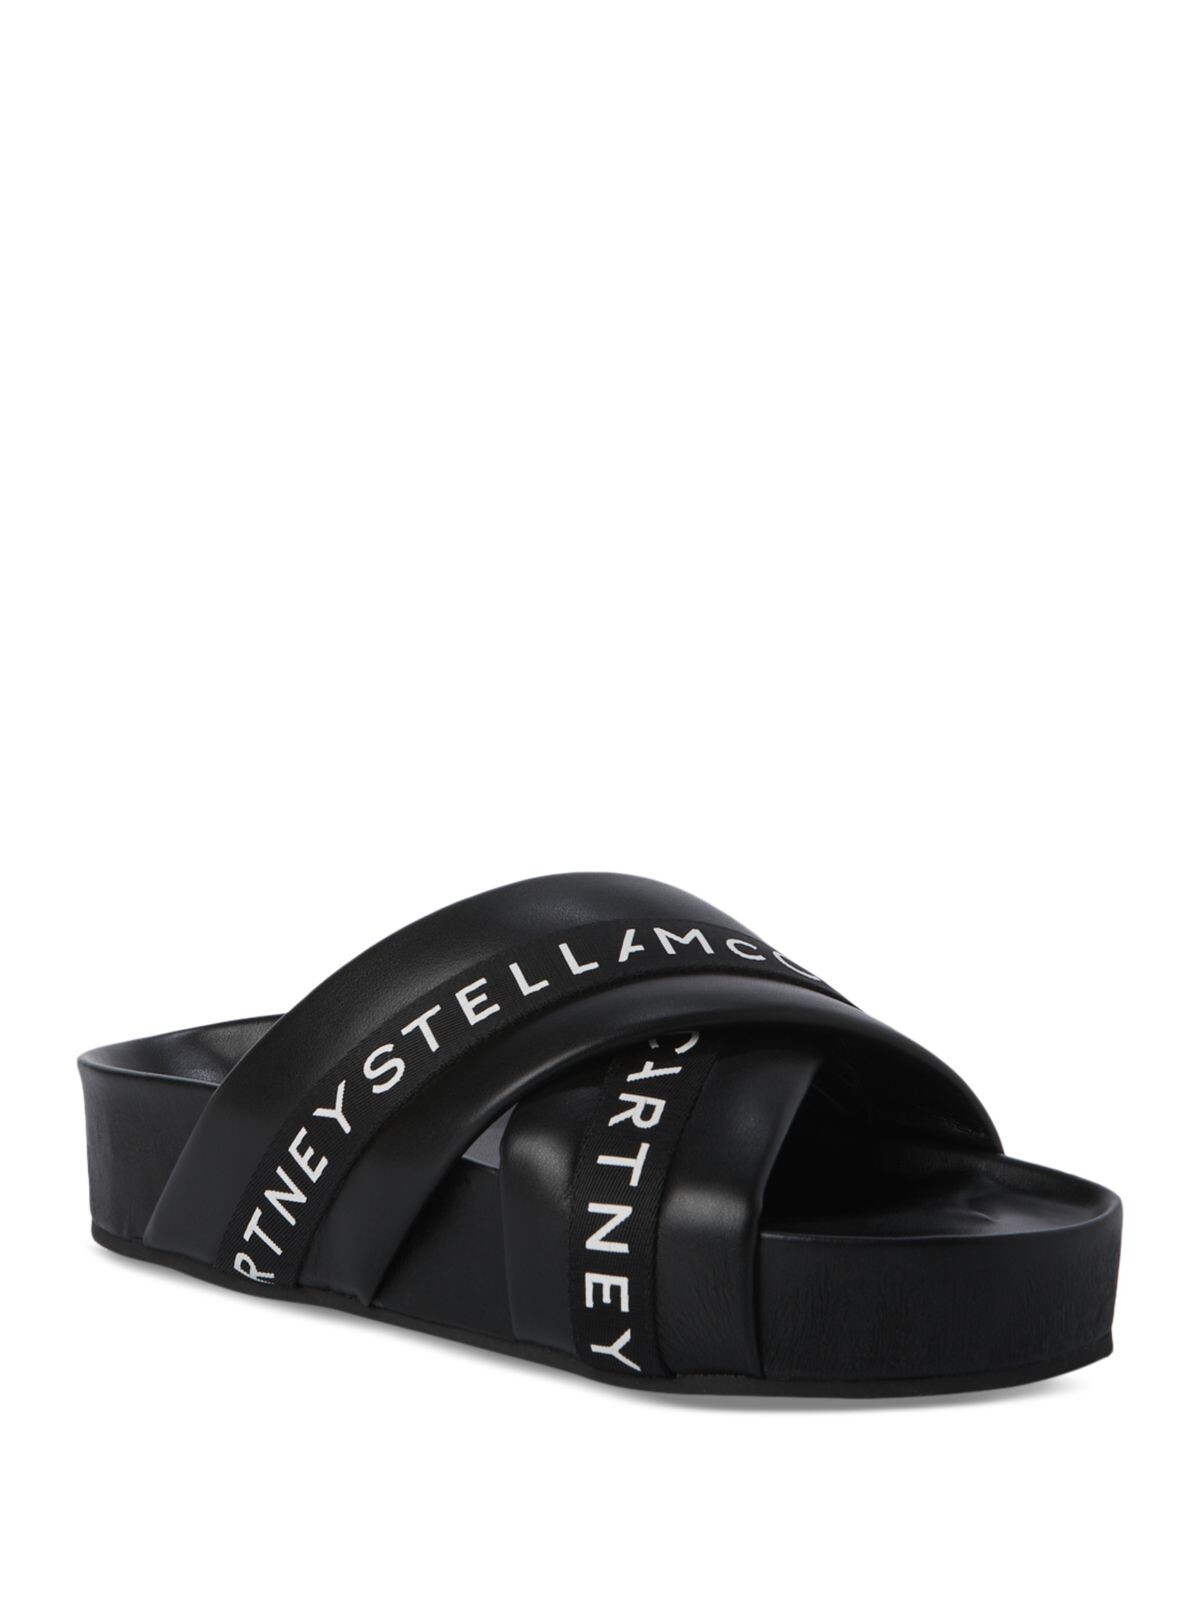 Stella Mccartney STELLAMCCARTNEY Womens Black Logo Comfort Vesta Round Toe Platform Slip On Slide Sandals Shoes 38